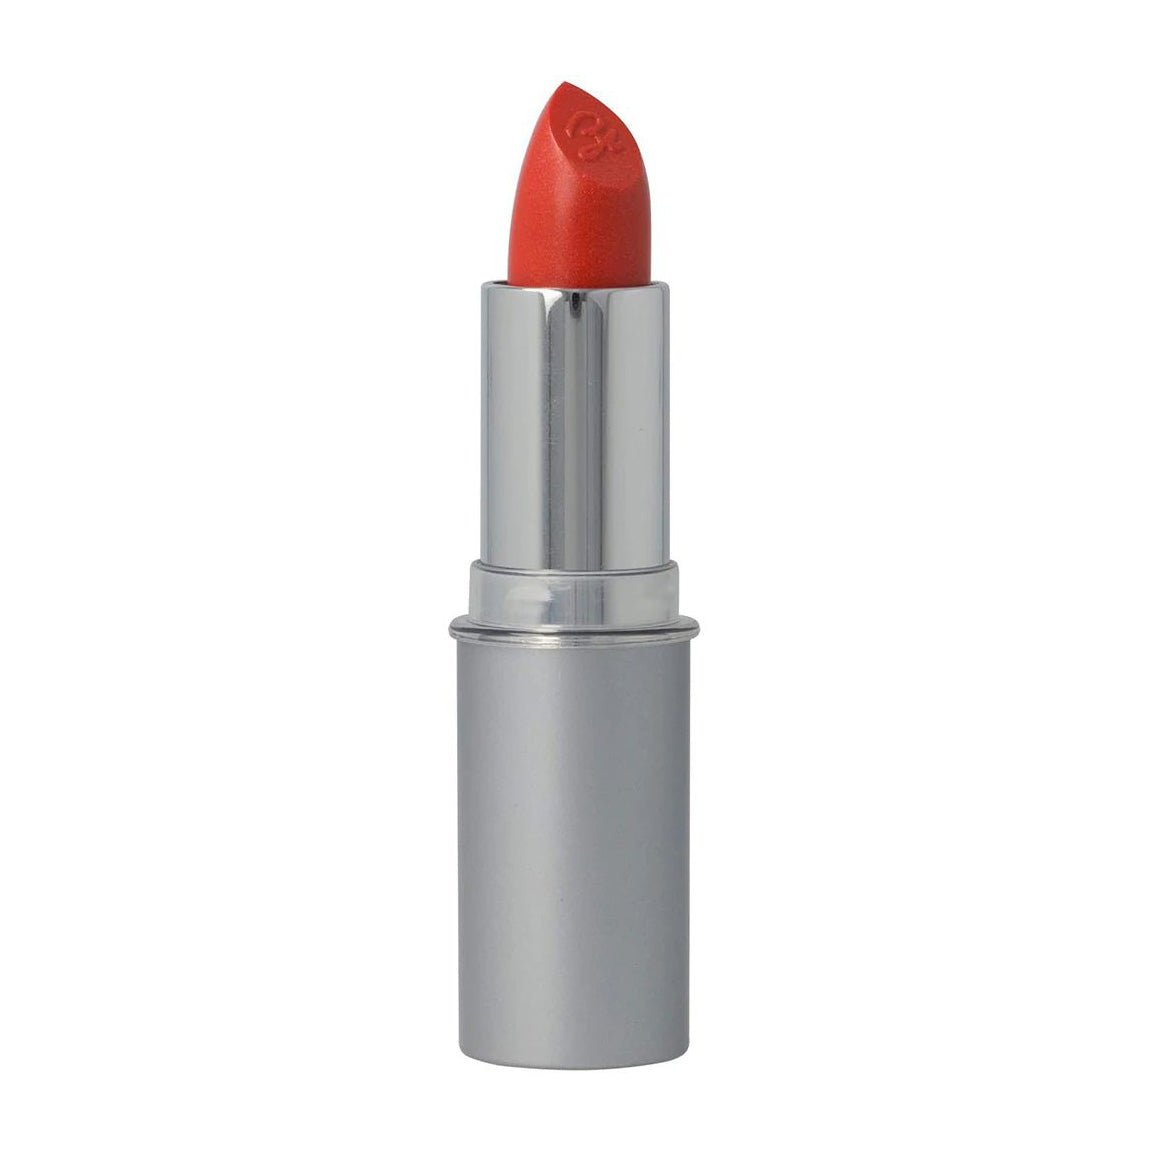 Bionike Defence Color Lip Shine Shiny Lipstick - Bloom Pharmacy